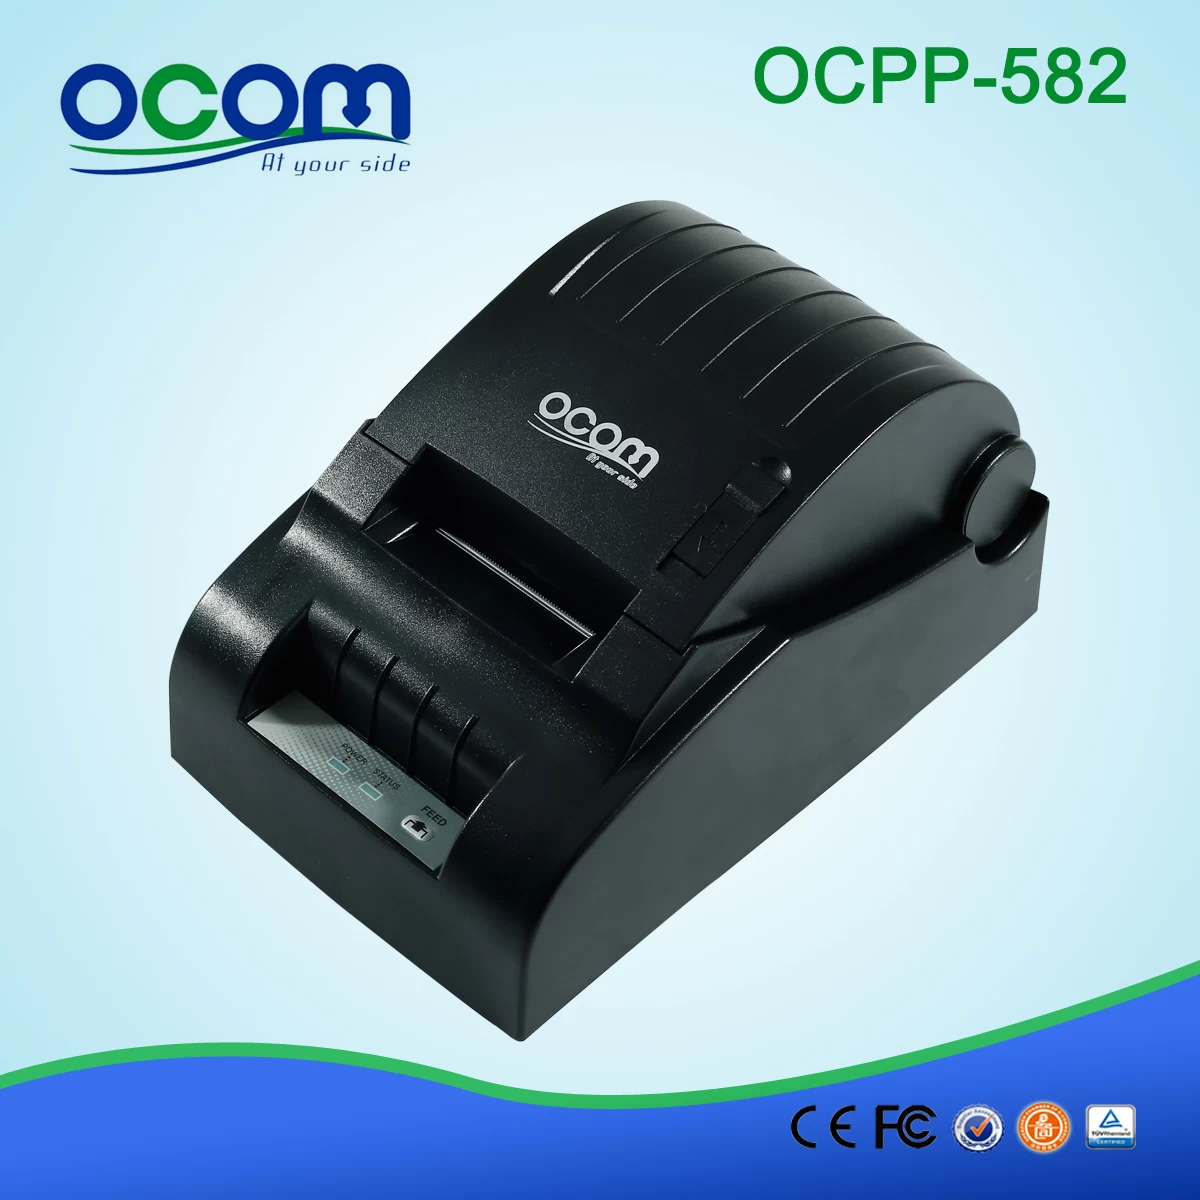 58mm Thermal Receipt Printer (OCPP-582)